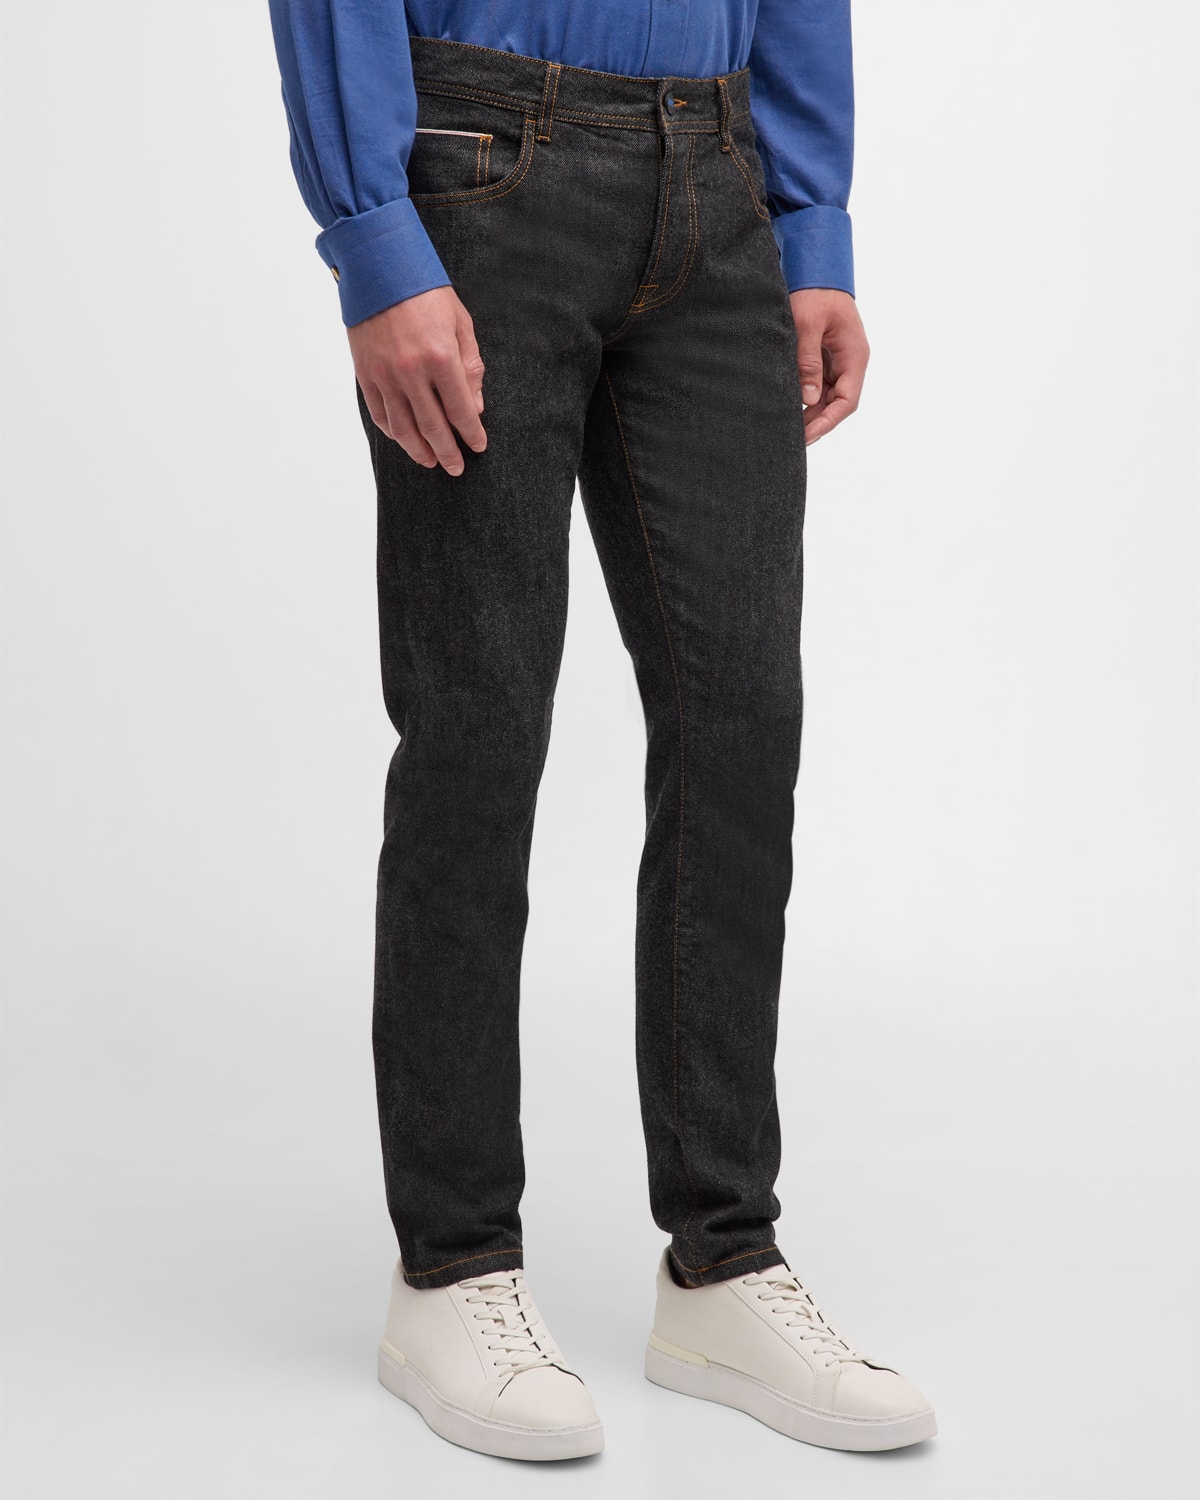 Men's Black Selvedge Denim Slim-Straight Jeans